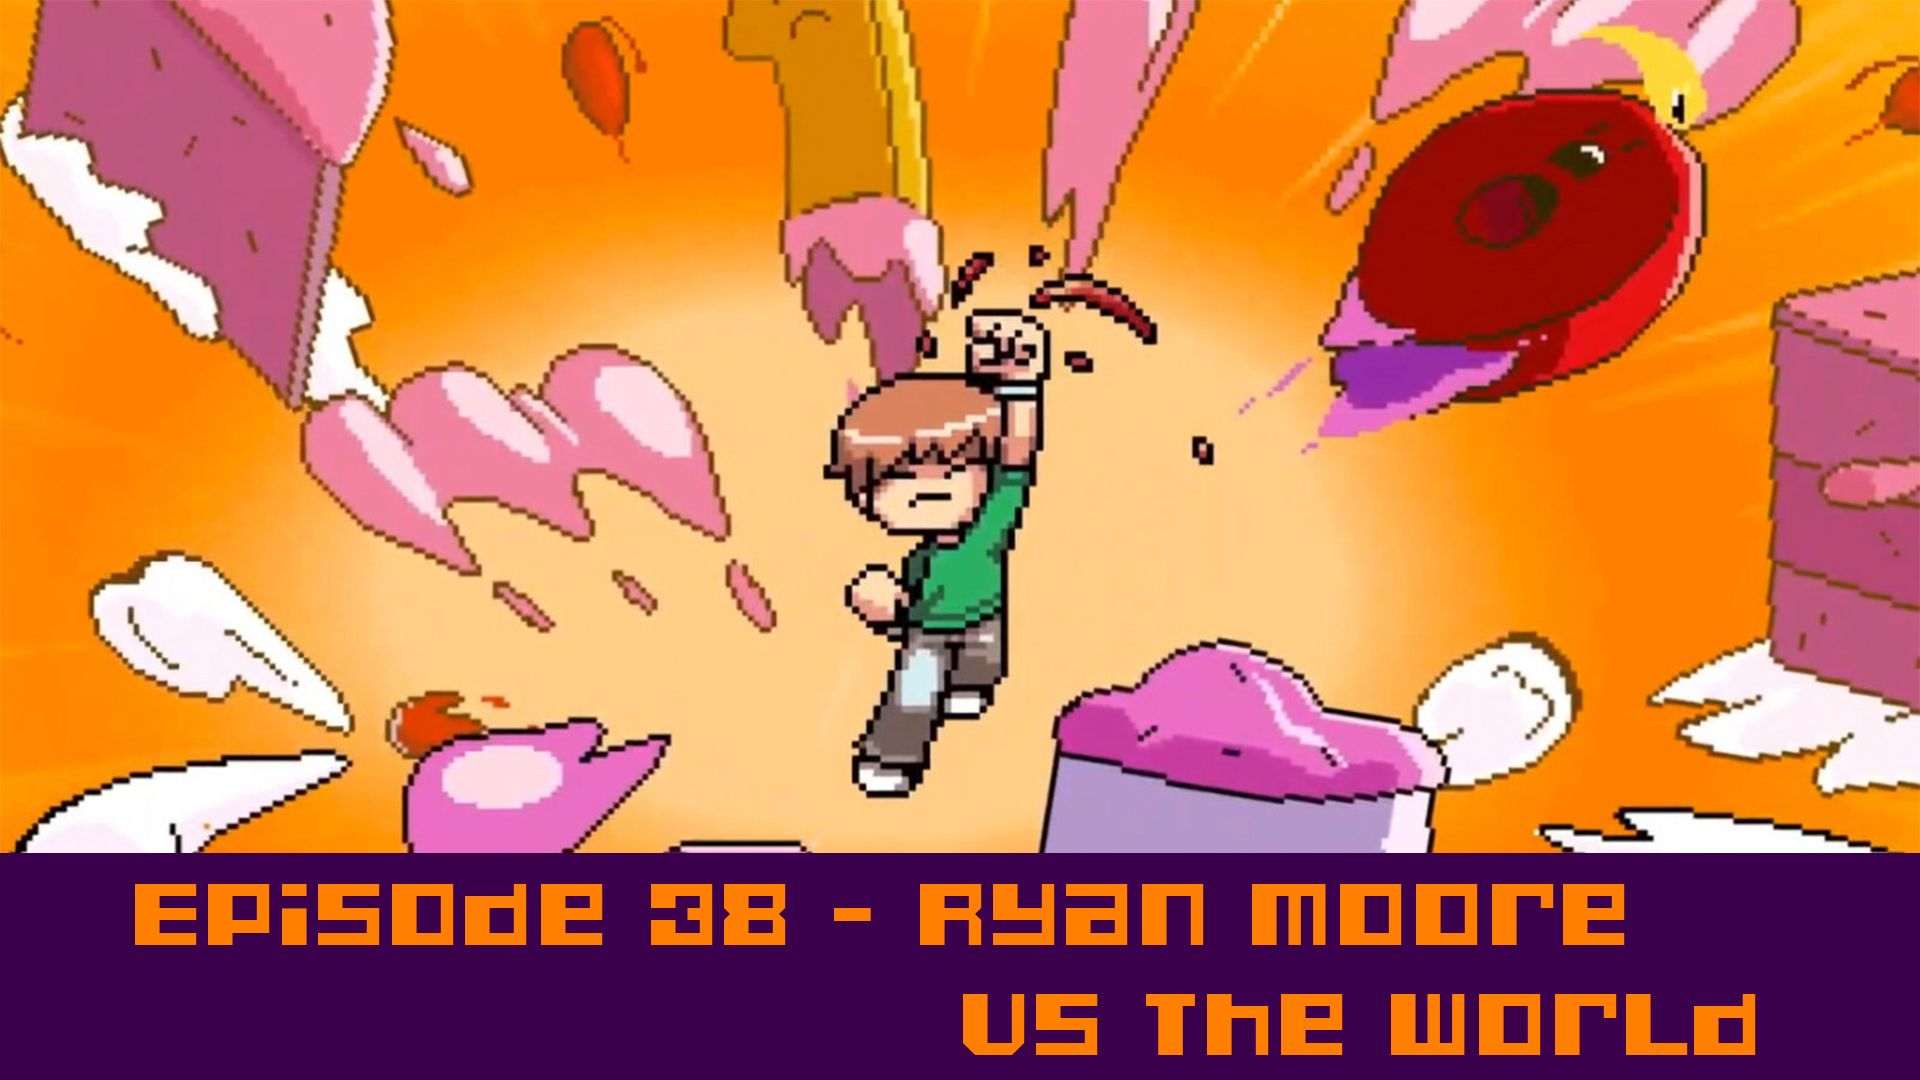 Episode 38 - Ryan Moore Vs The World